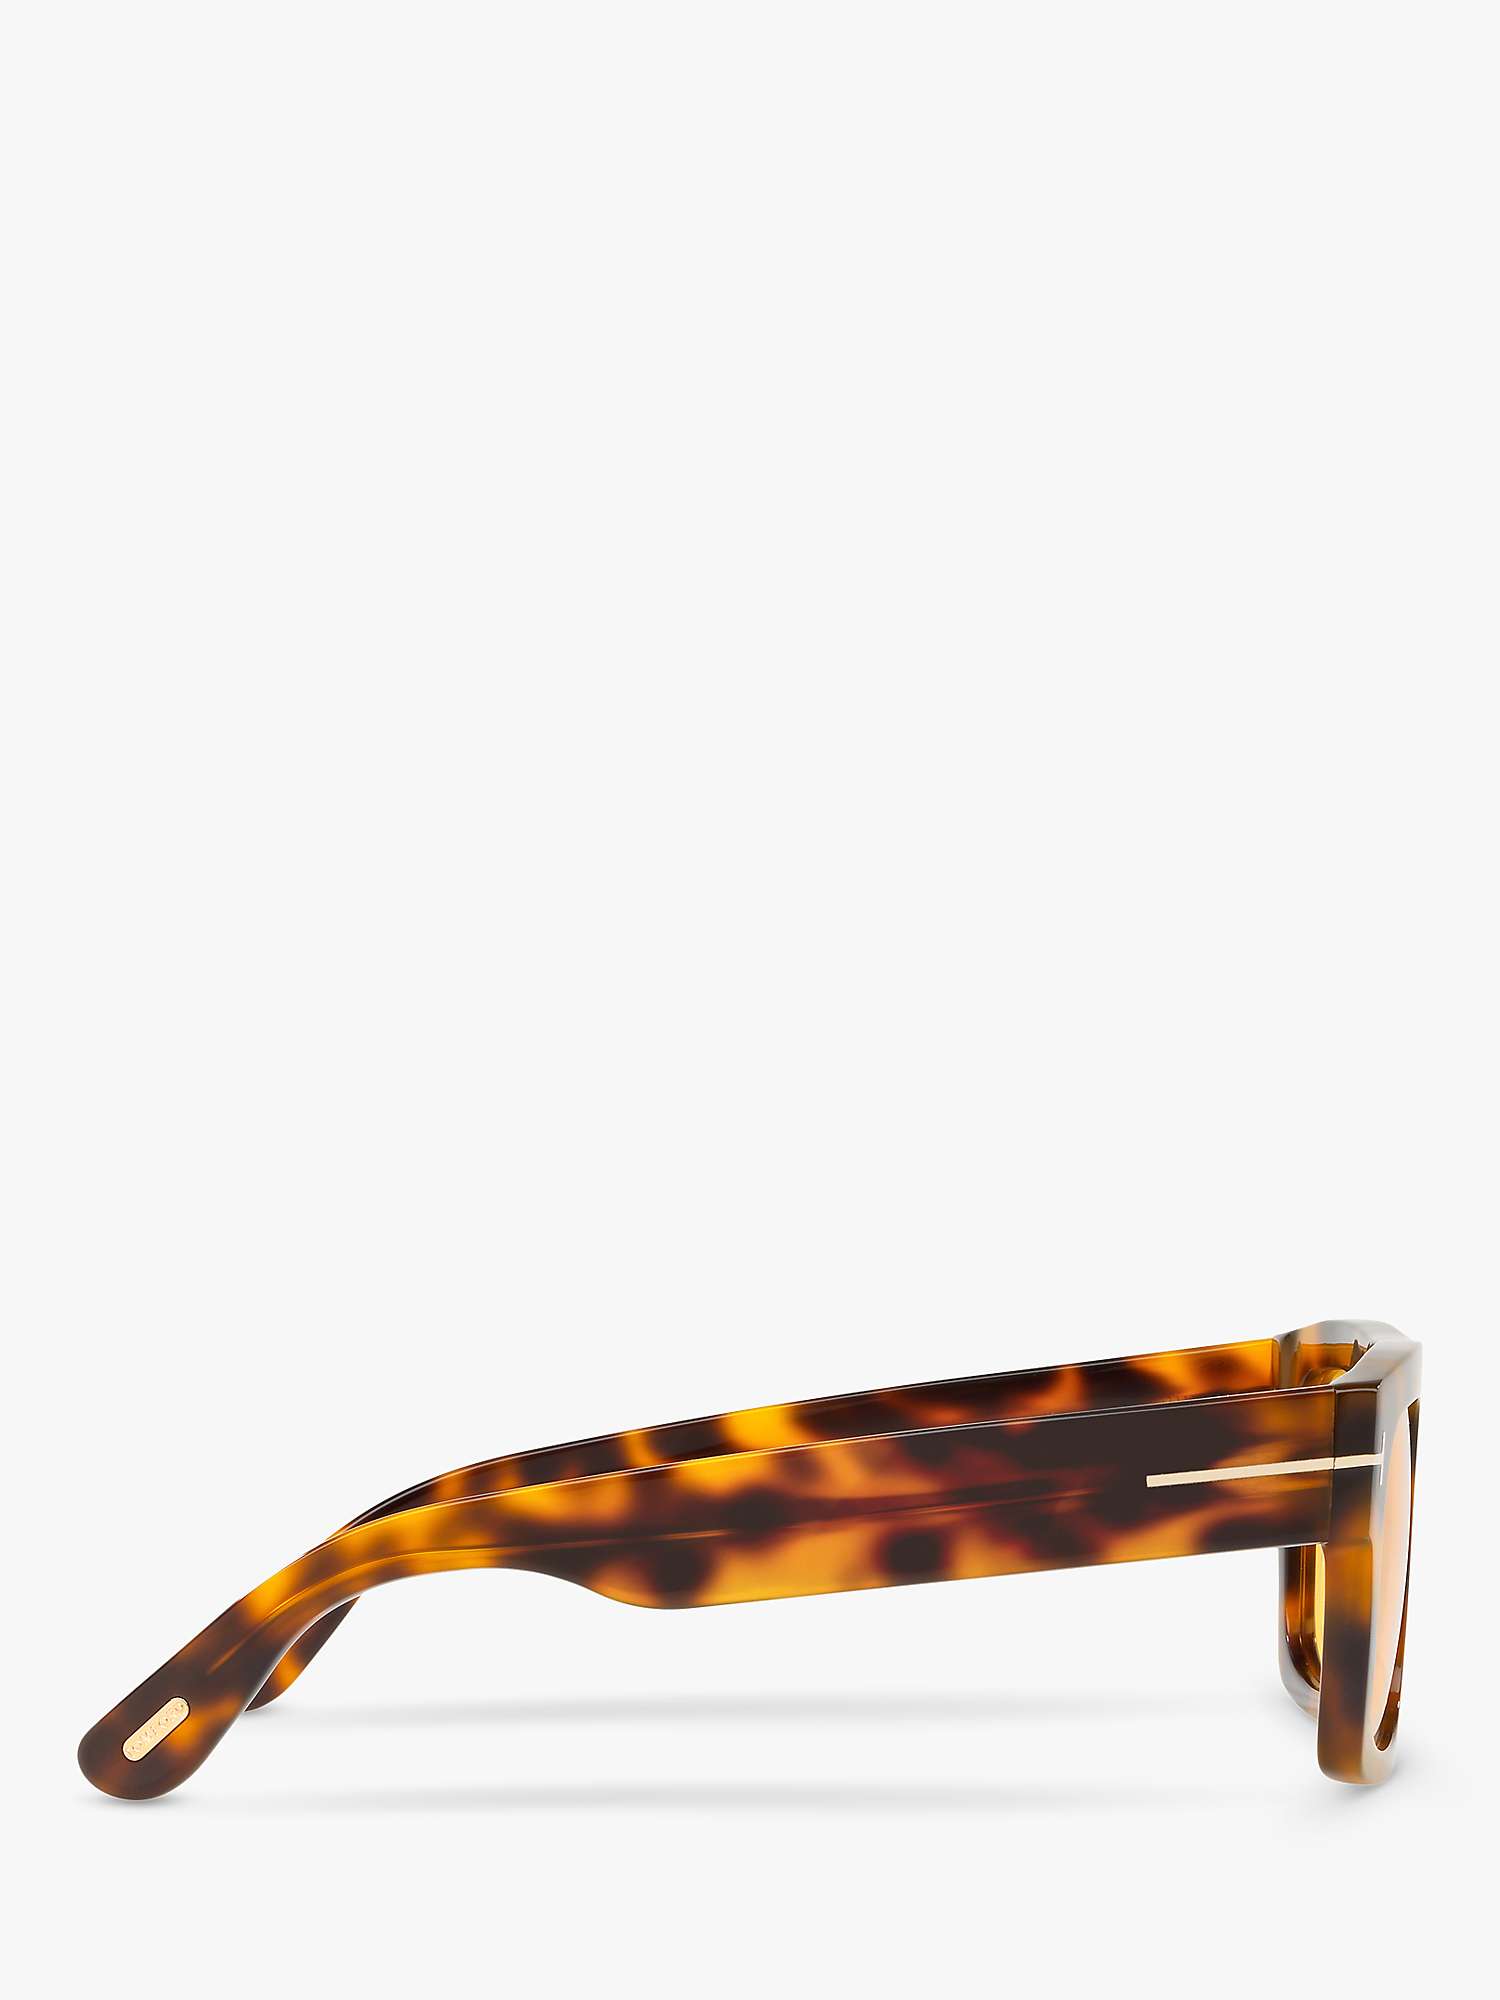 Buy TOM FORD FT0711 Men's Fausto Square Sunglasses Online at johnlewis.com